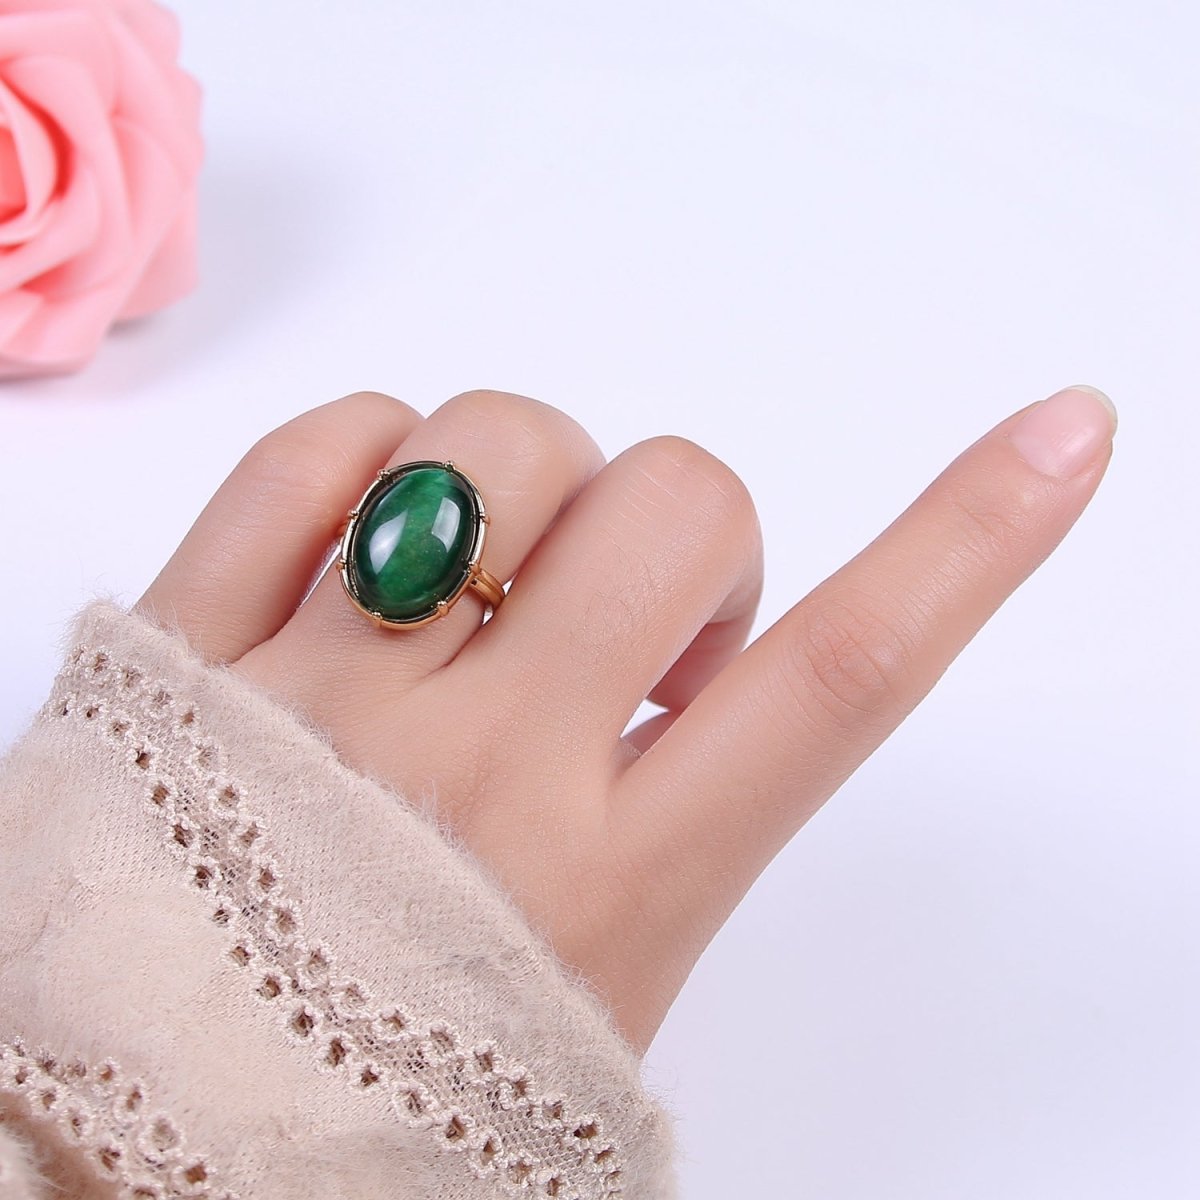 Buy Gemstone Rings at Affordable Price in UAE | Carat Craft